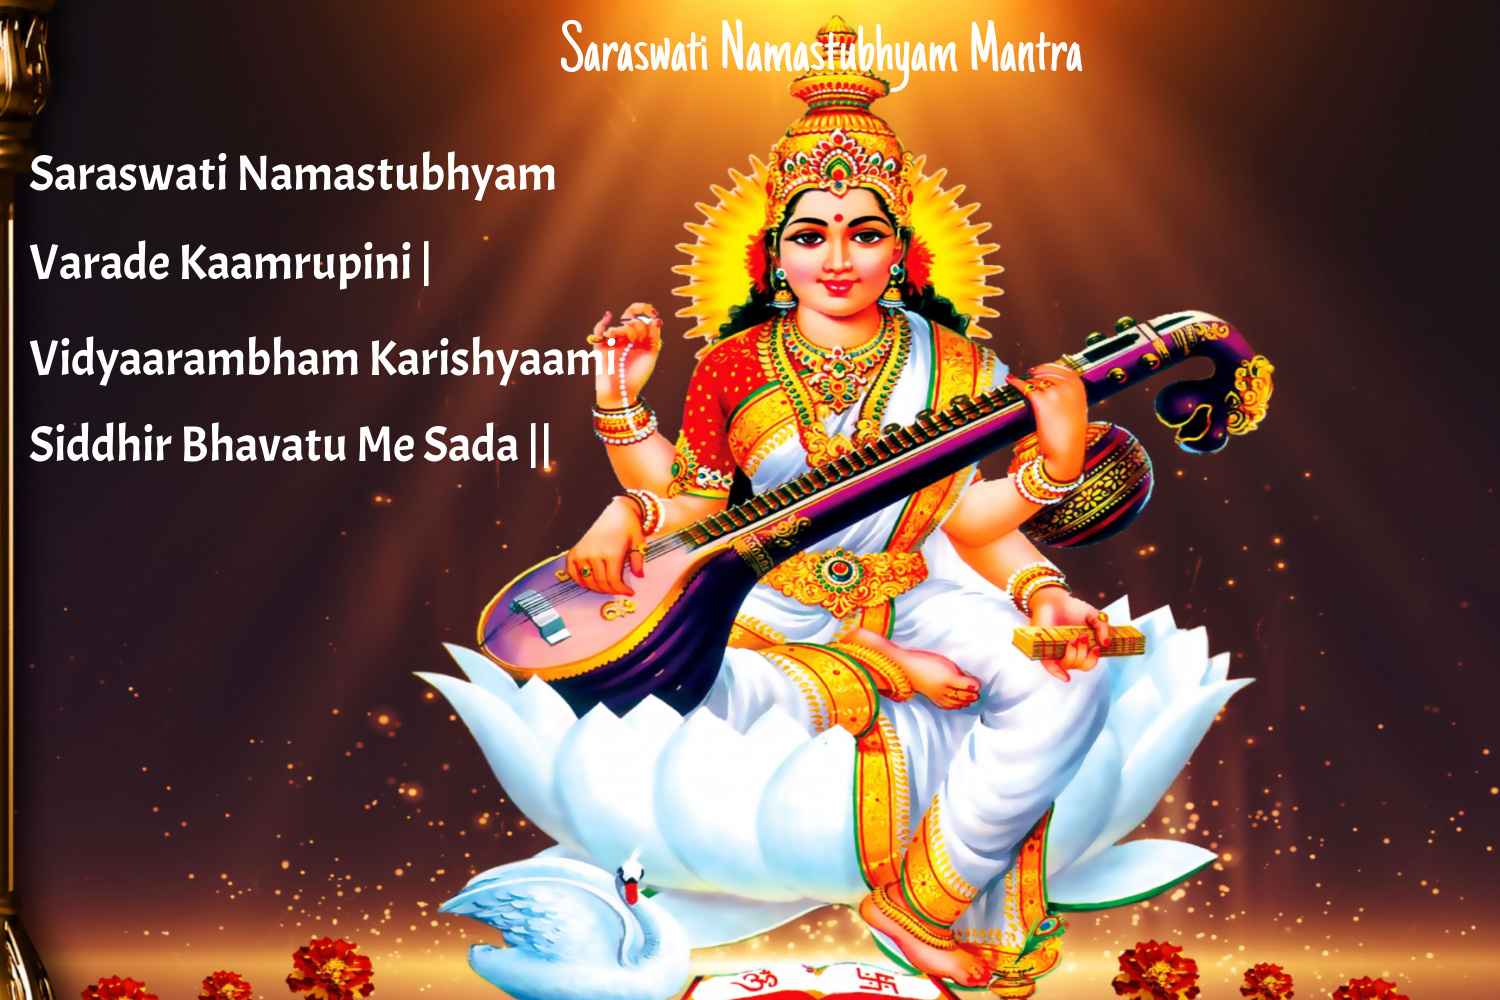 Saraswati Namastubhyam Mantra